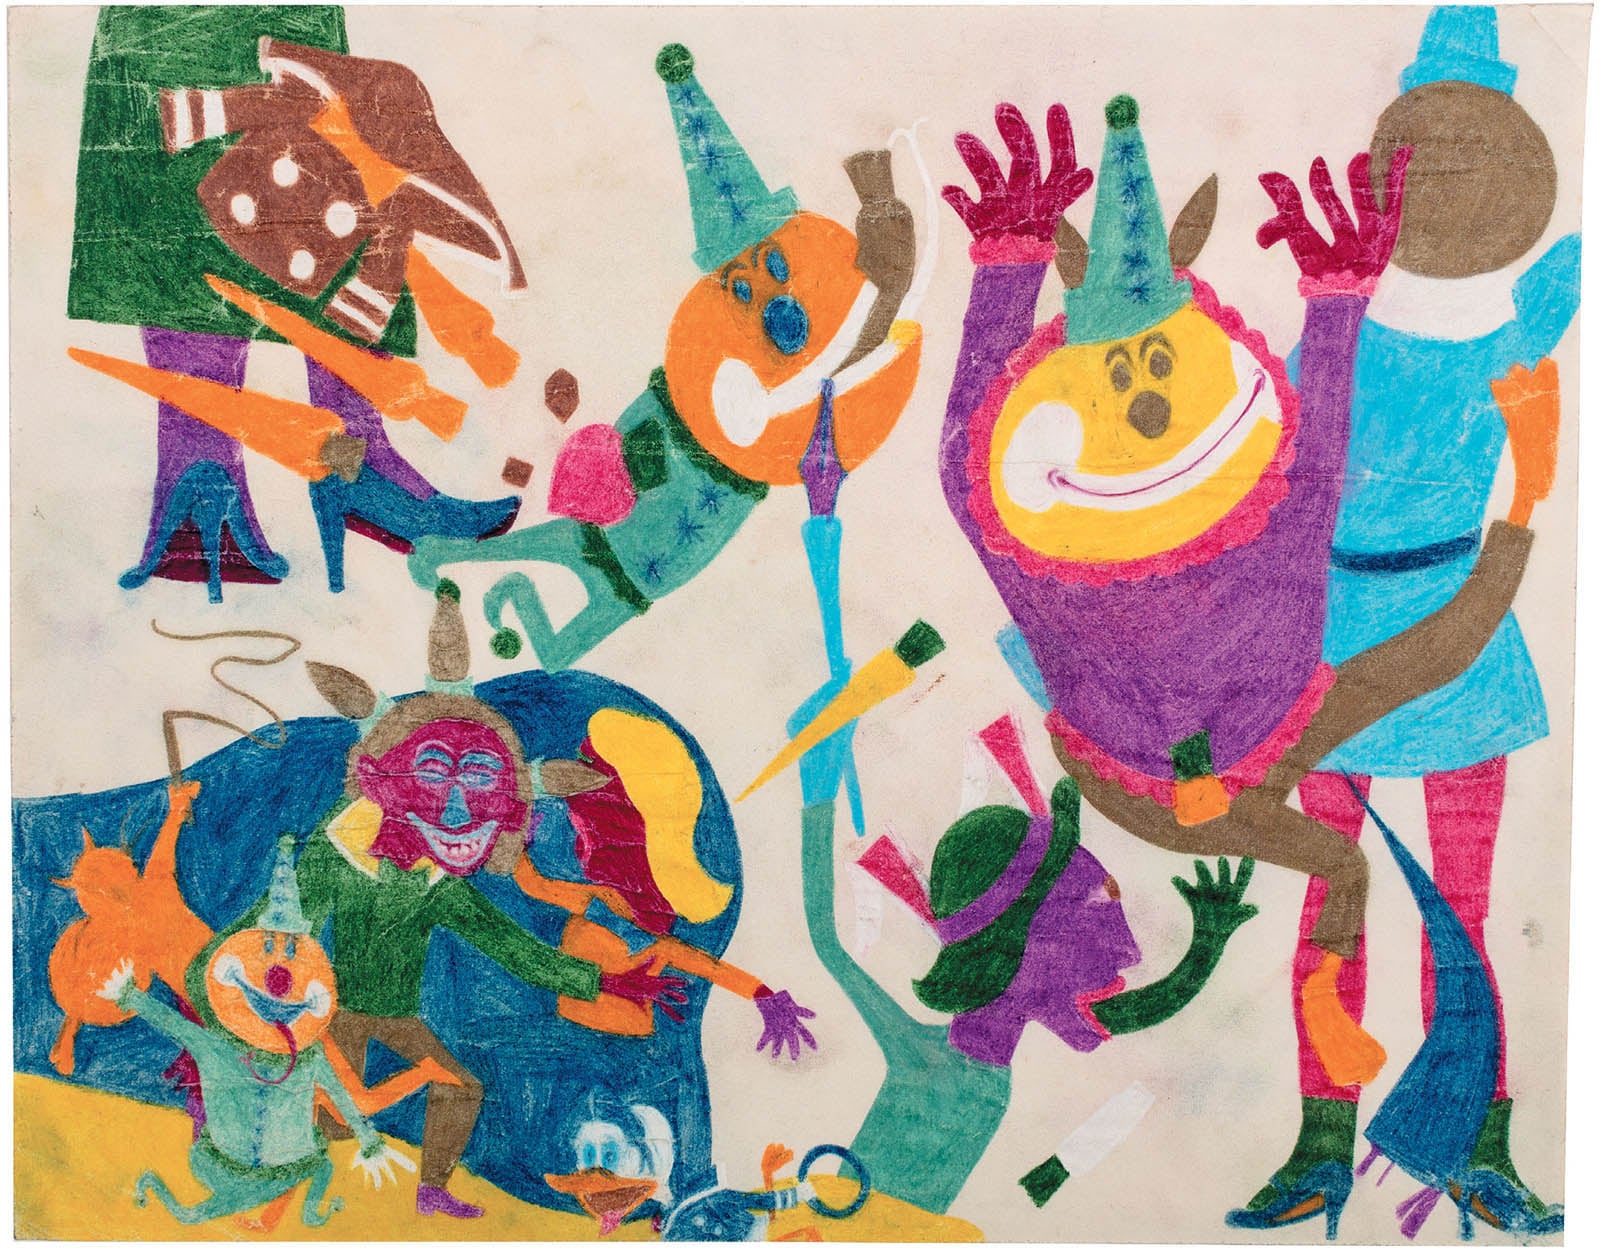 Susan Te Kahurangi King, <em>Untitled (D04025)</em> c. 1966–67. Graphite and colored pencil on paper. 20.5 × 26 cm. Courtesy the artist, Chris Byrne and Marlborough Contemporary